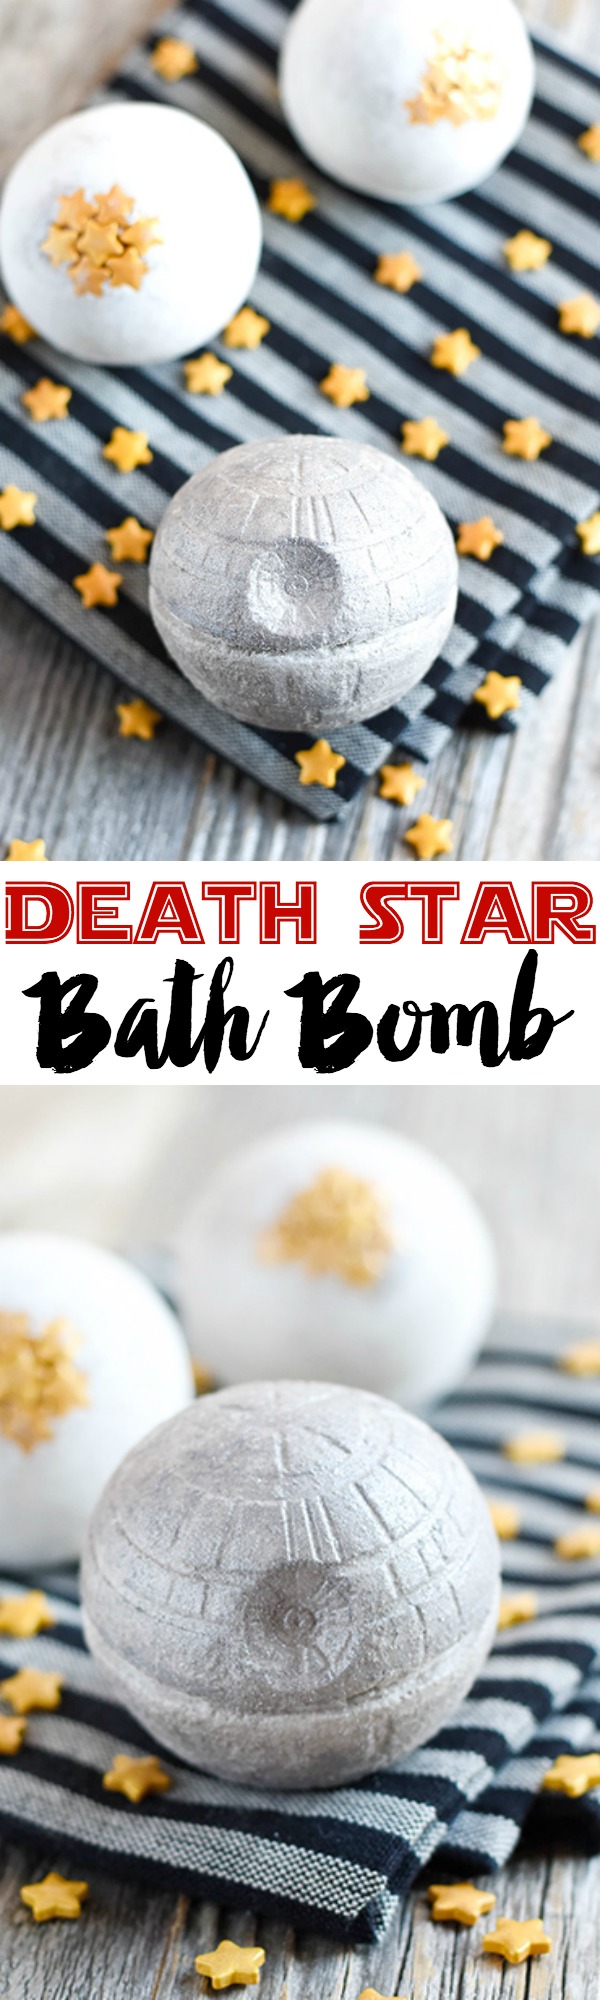 How to make a Star Wars Death Star bath bomb